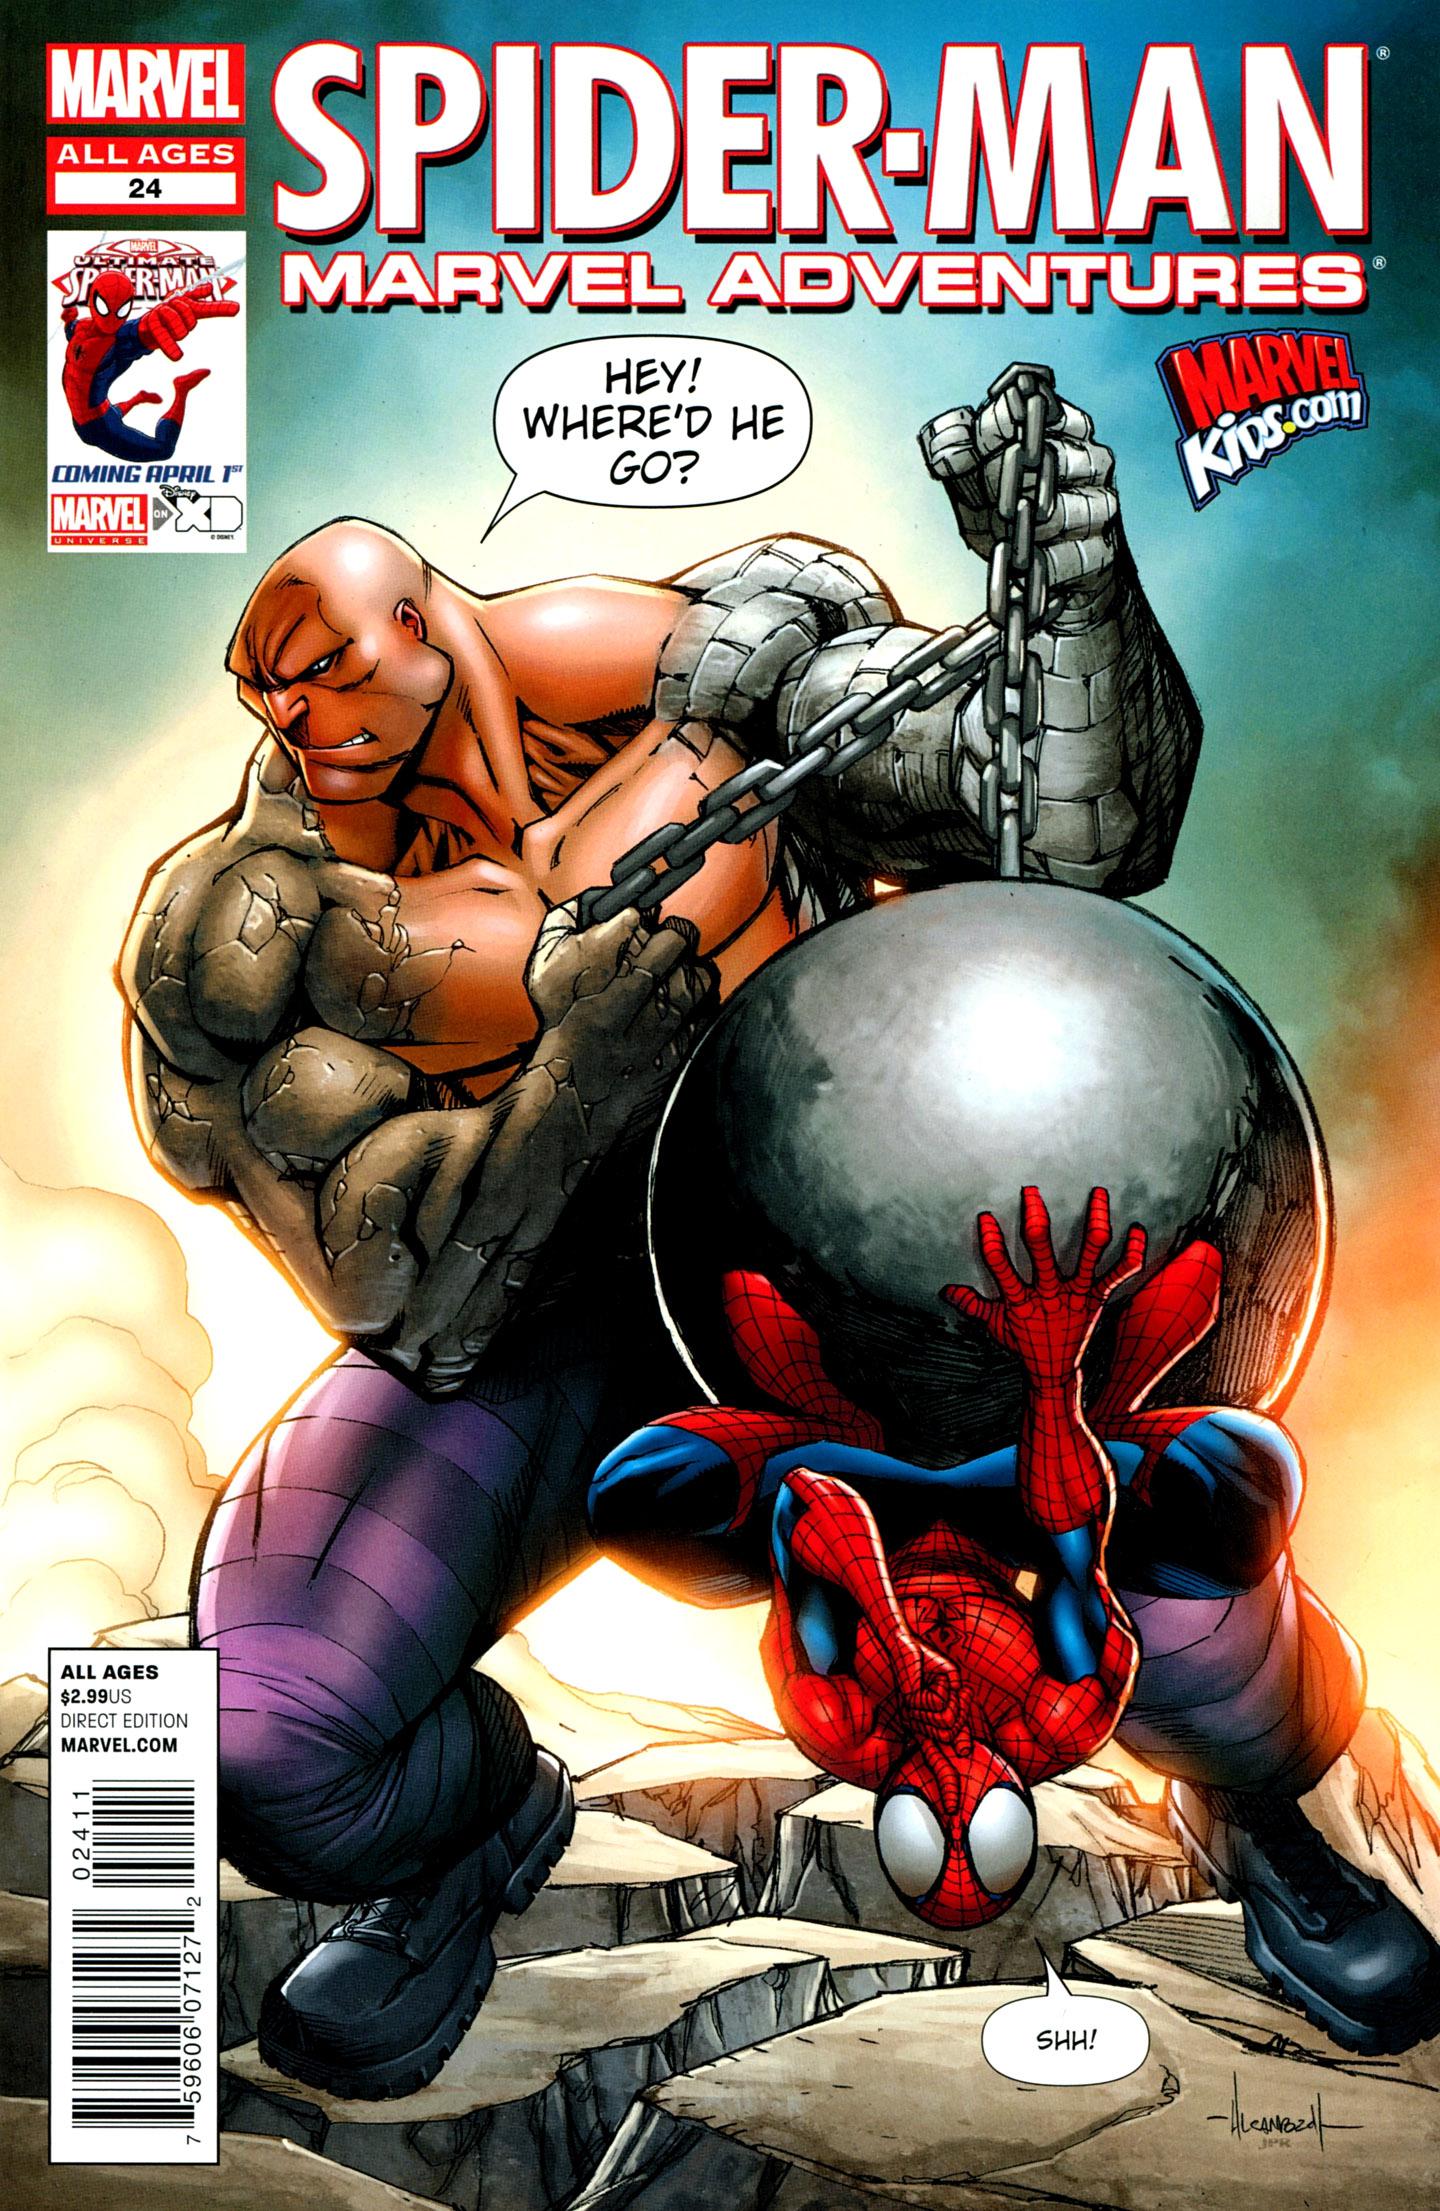 Marvel Adventures: Spider-Man Vol. 2 #24